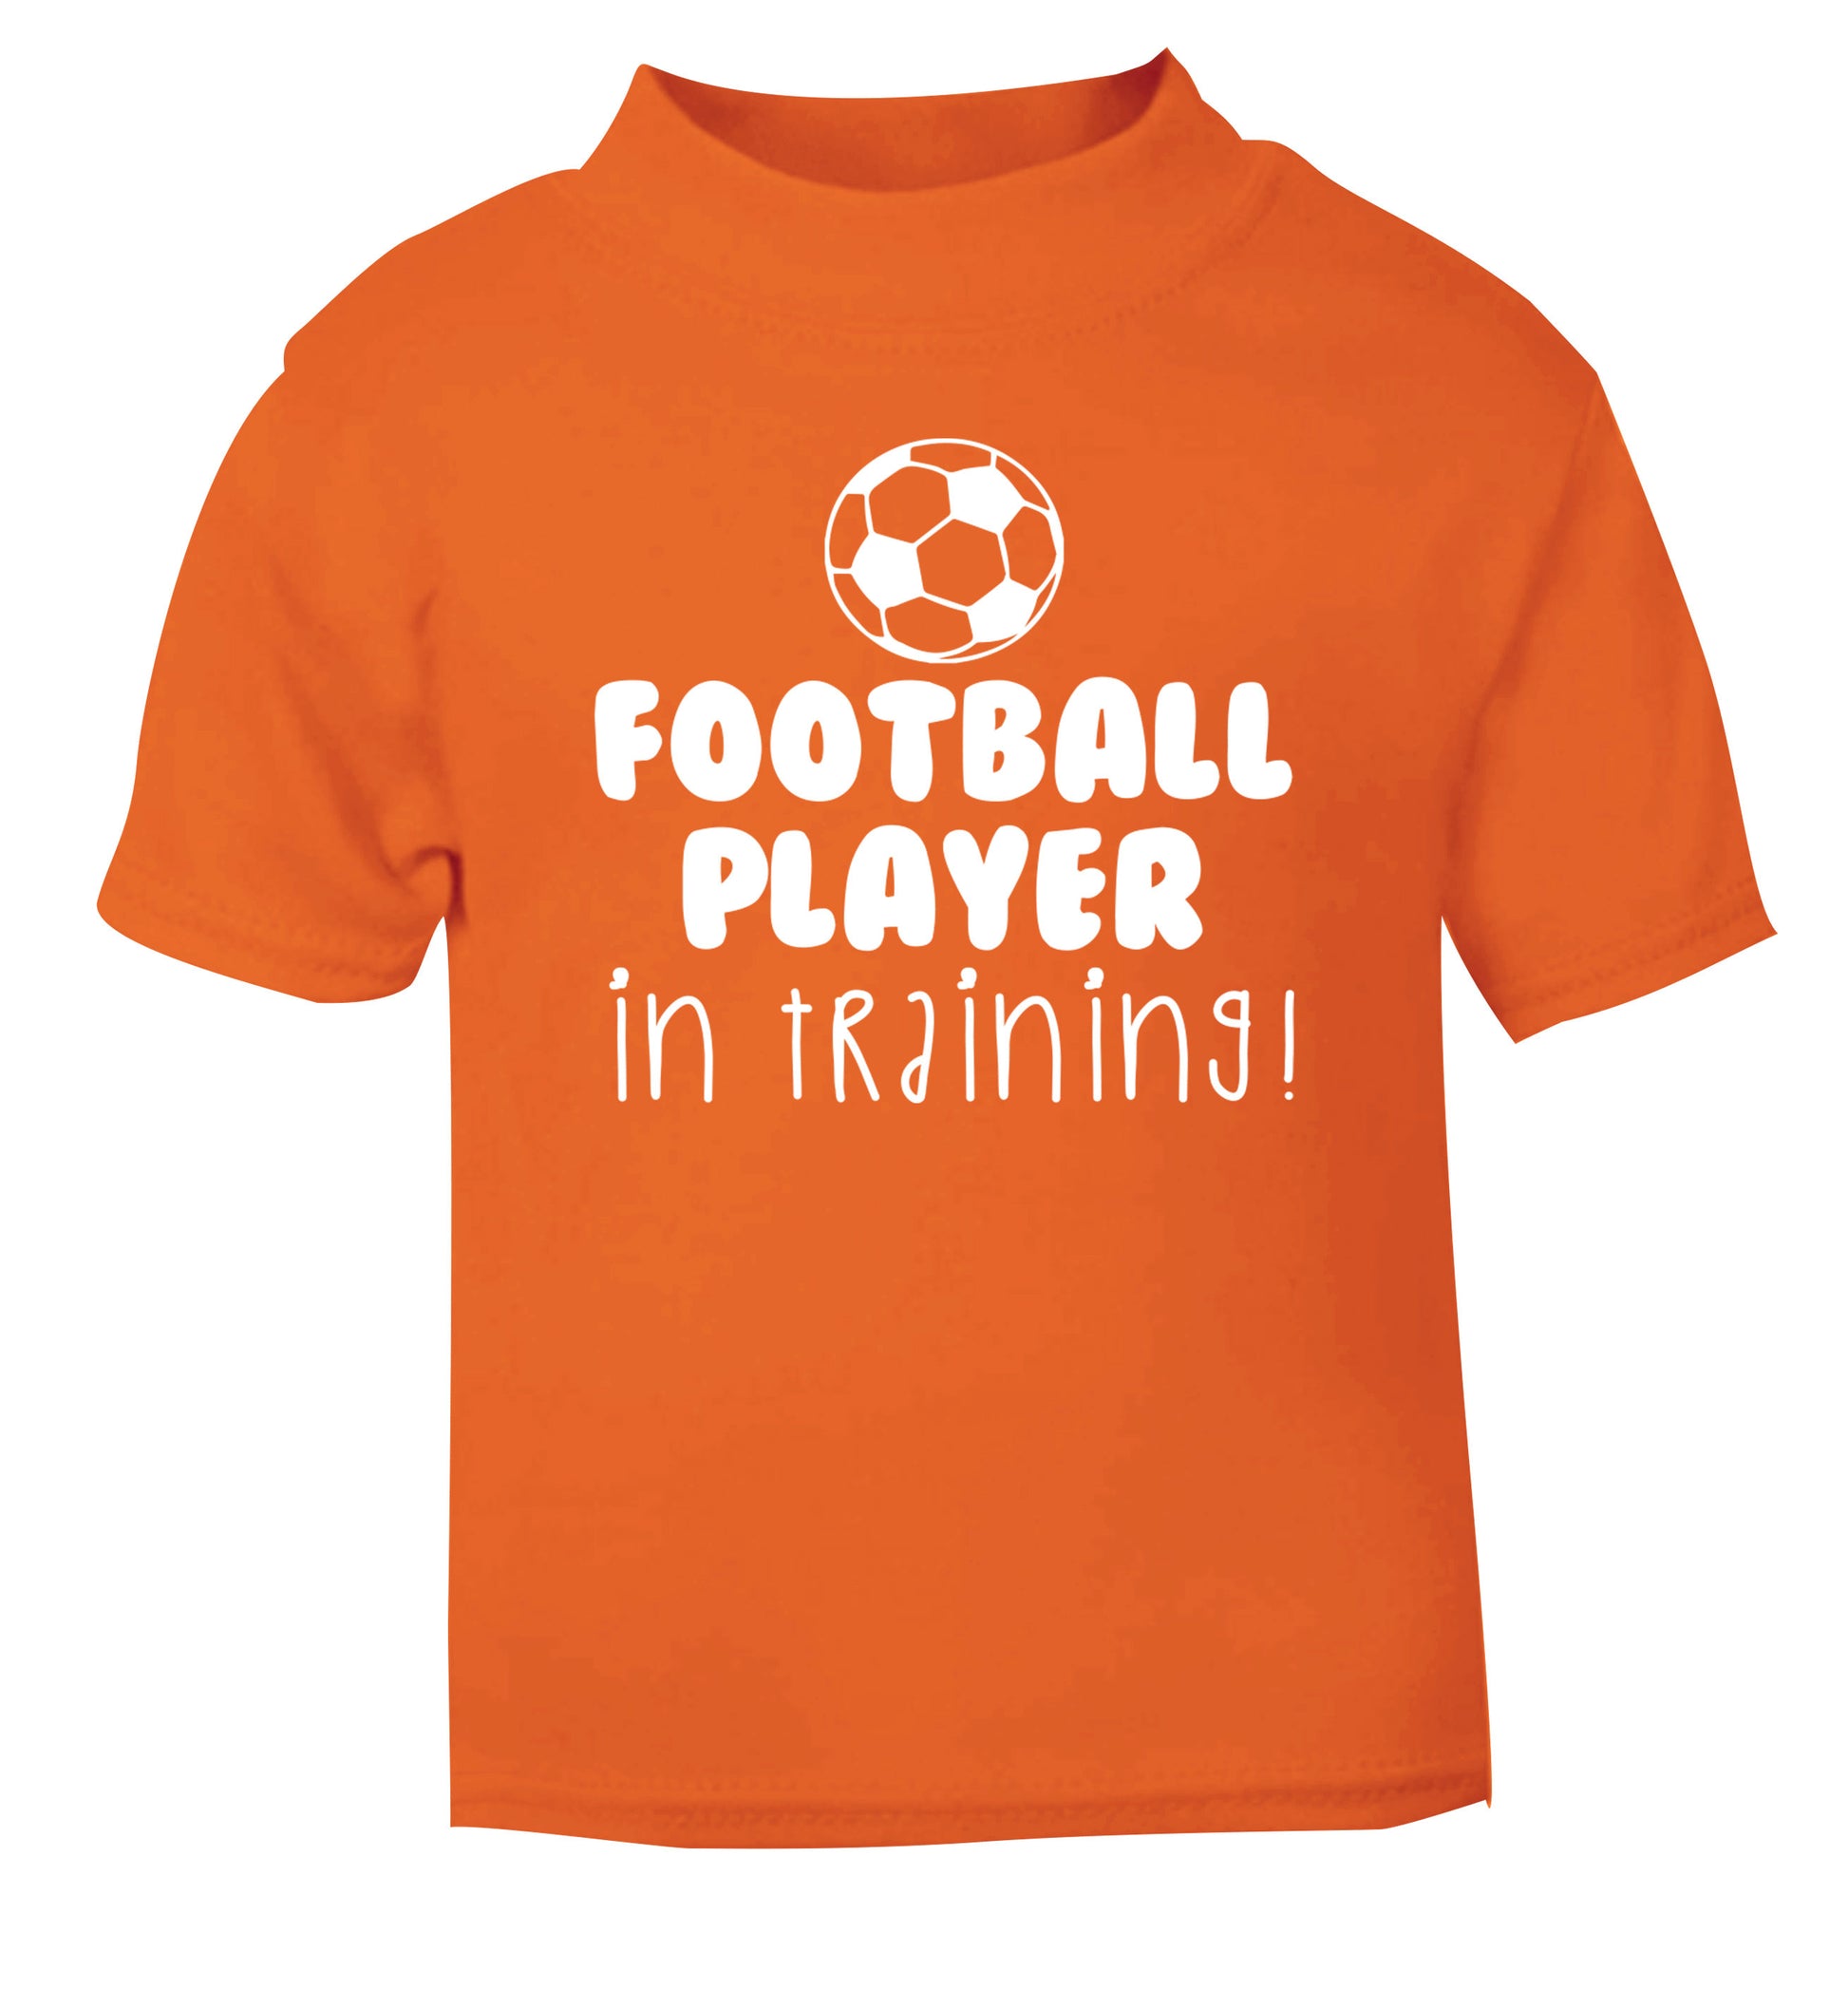 Football player in training orange Baby Toddler Tshirt 2 Years